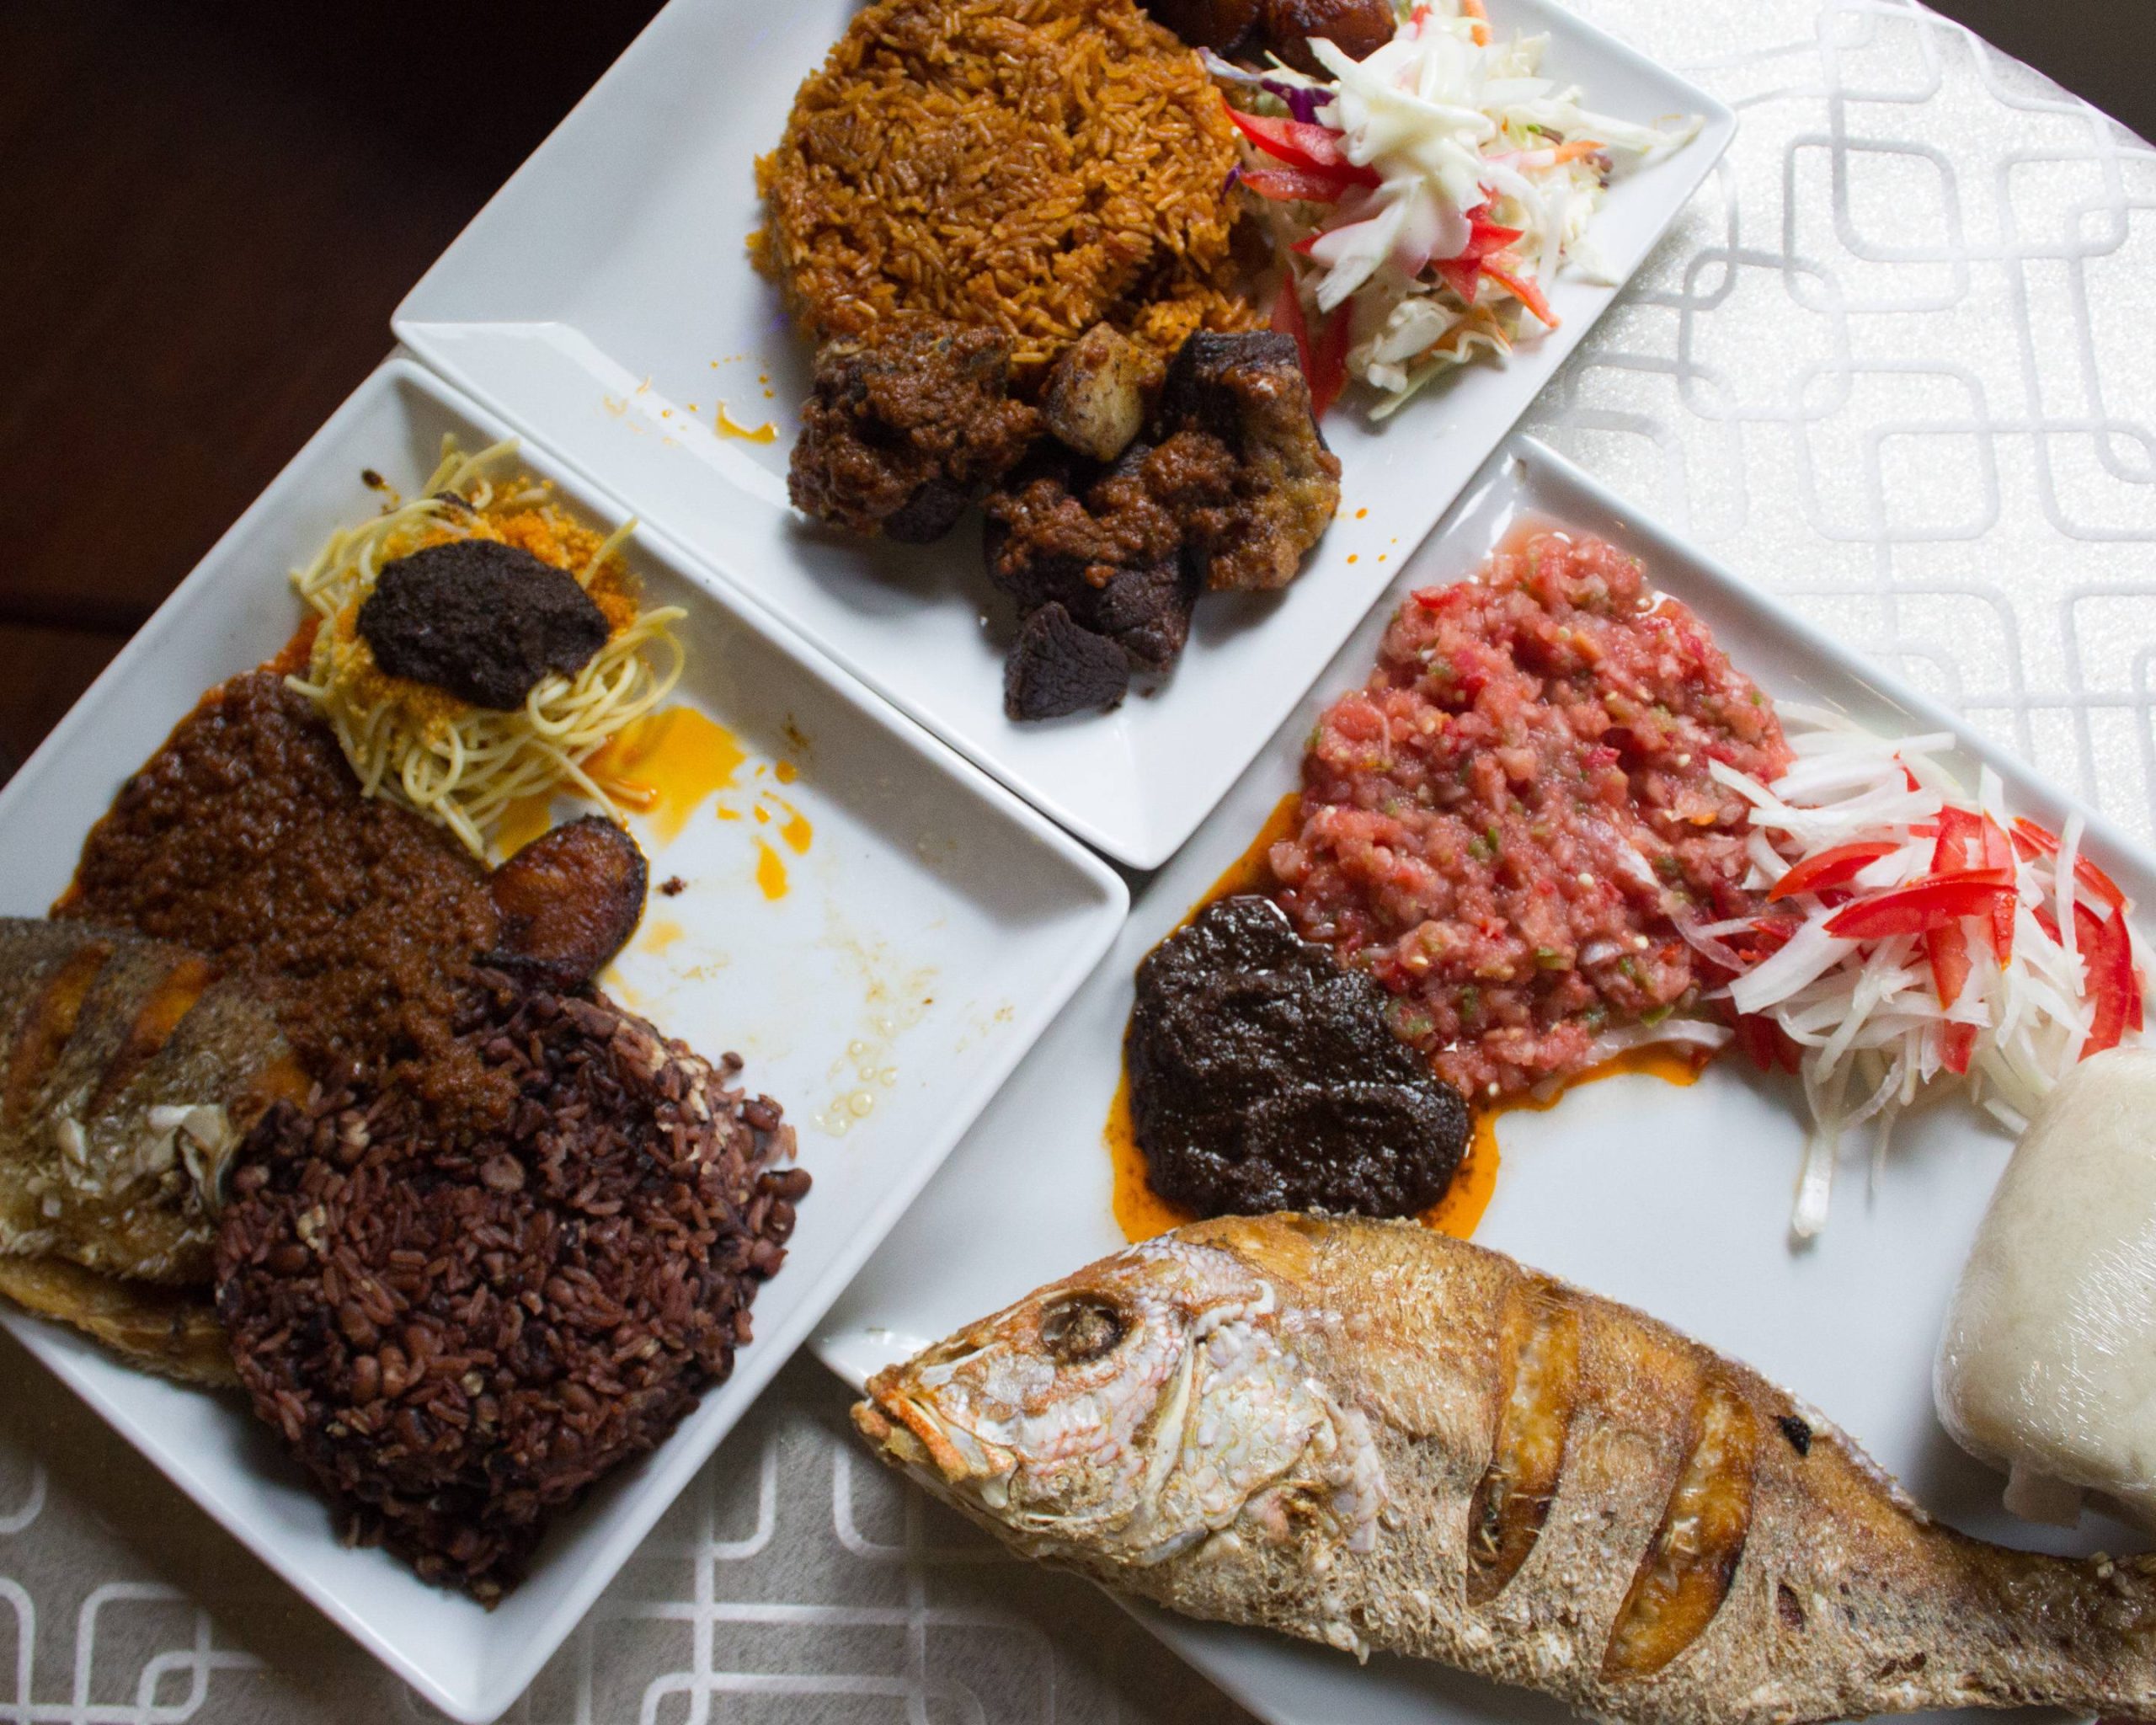 The Mukase African Restaurant